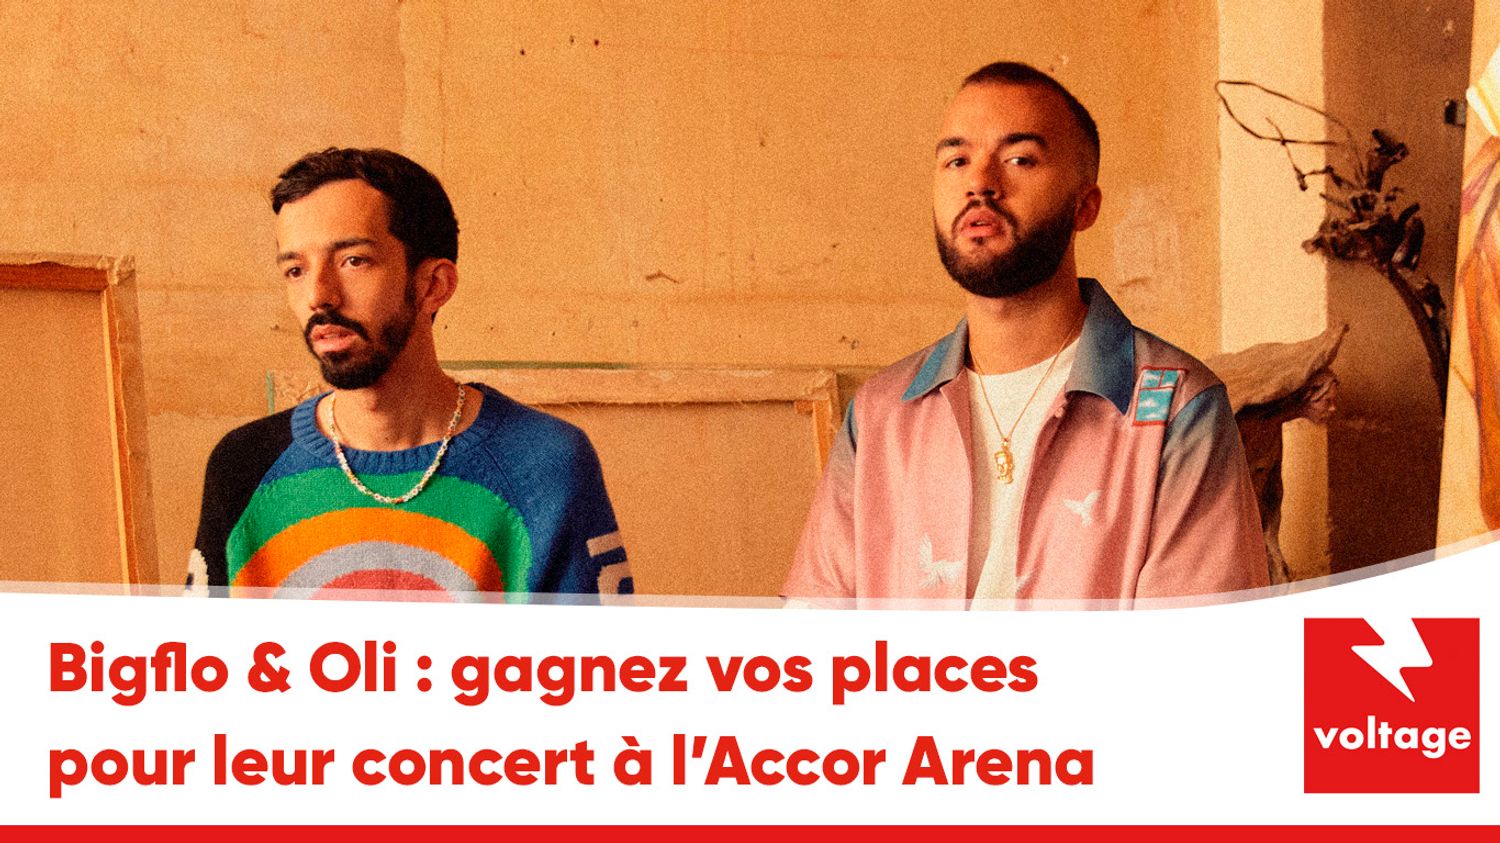 Bigflo & Oli - Accor Arena